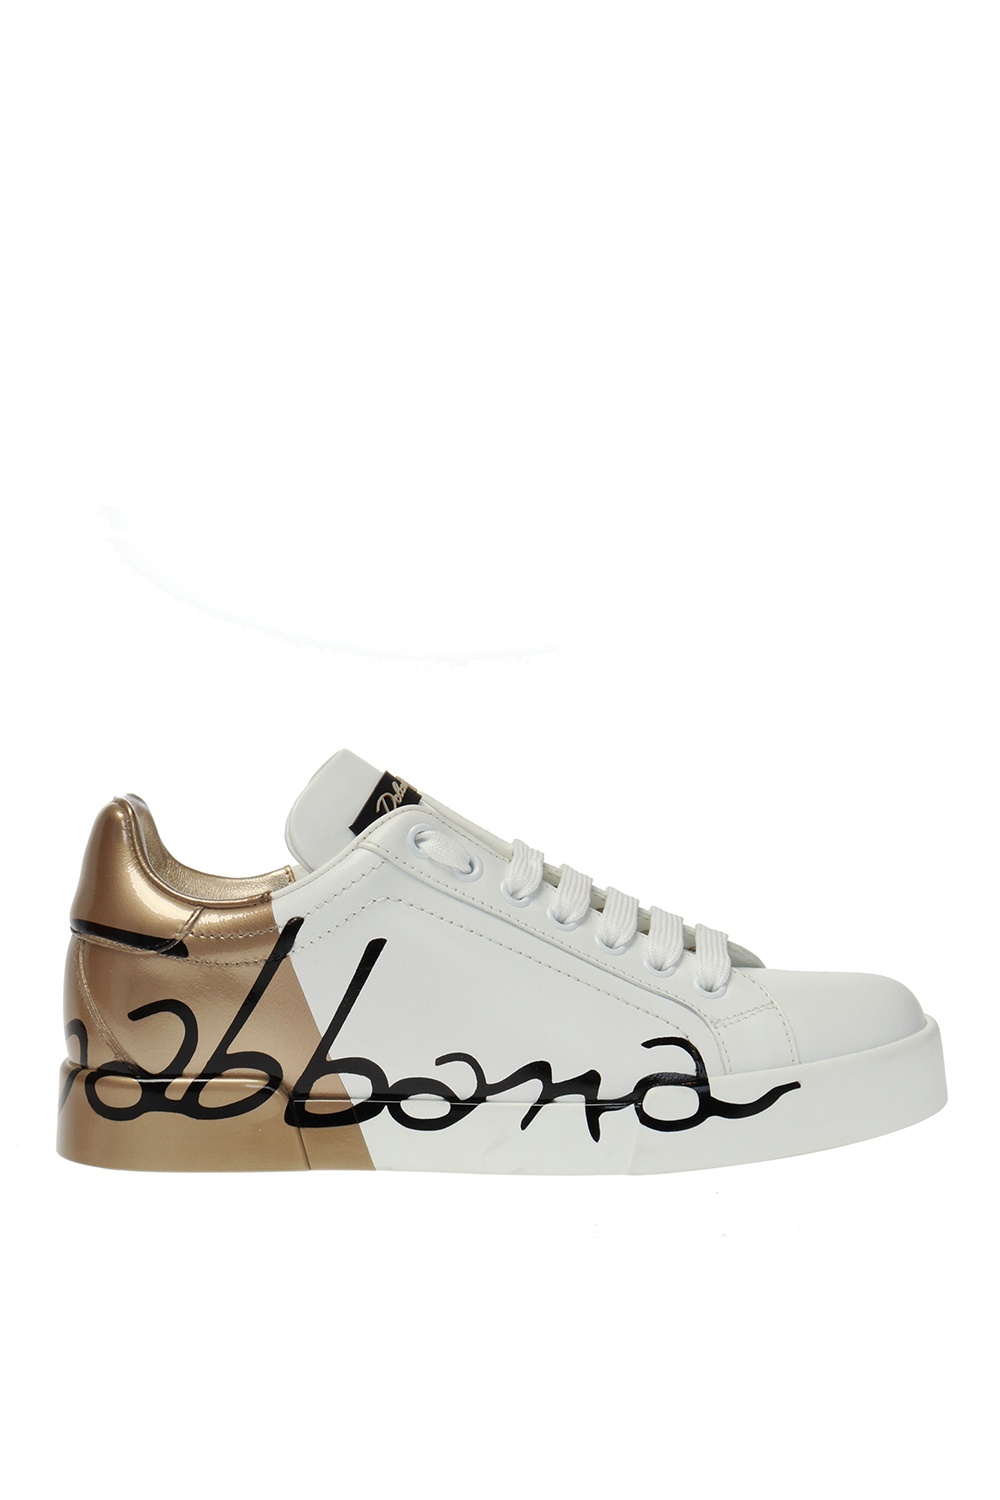 indsats Udelade Kvæle IetpShops | Dolce & Gabbana Sneakers with logo | Women's Shoes | Dolce &  Gabbana Floral-Print Jeweled Sling Back Pumps